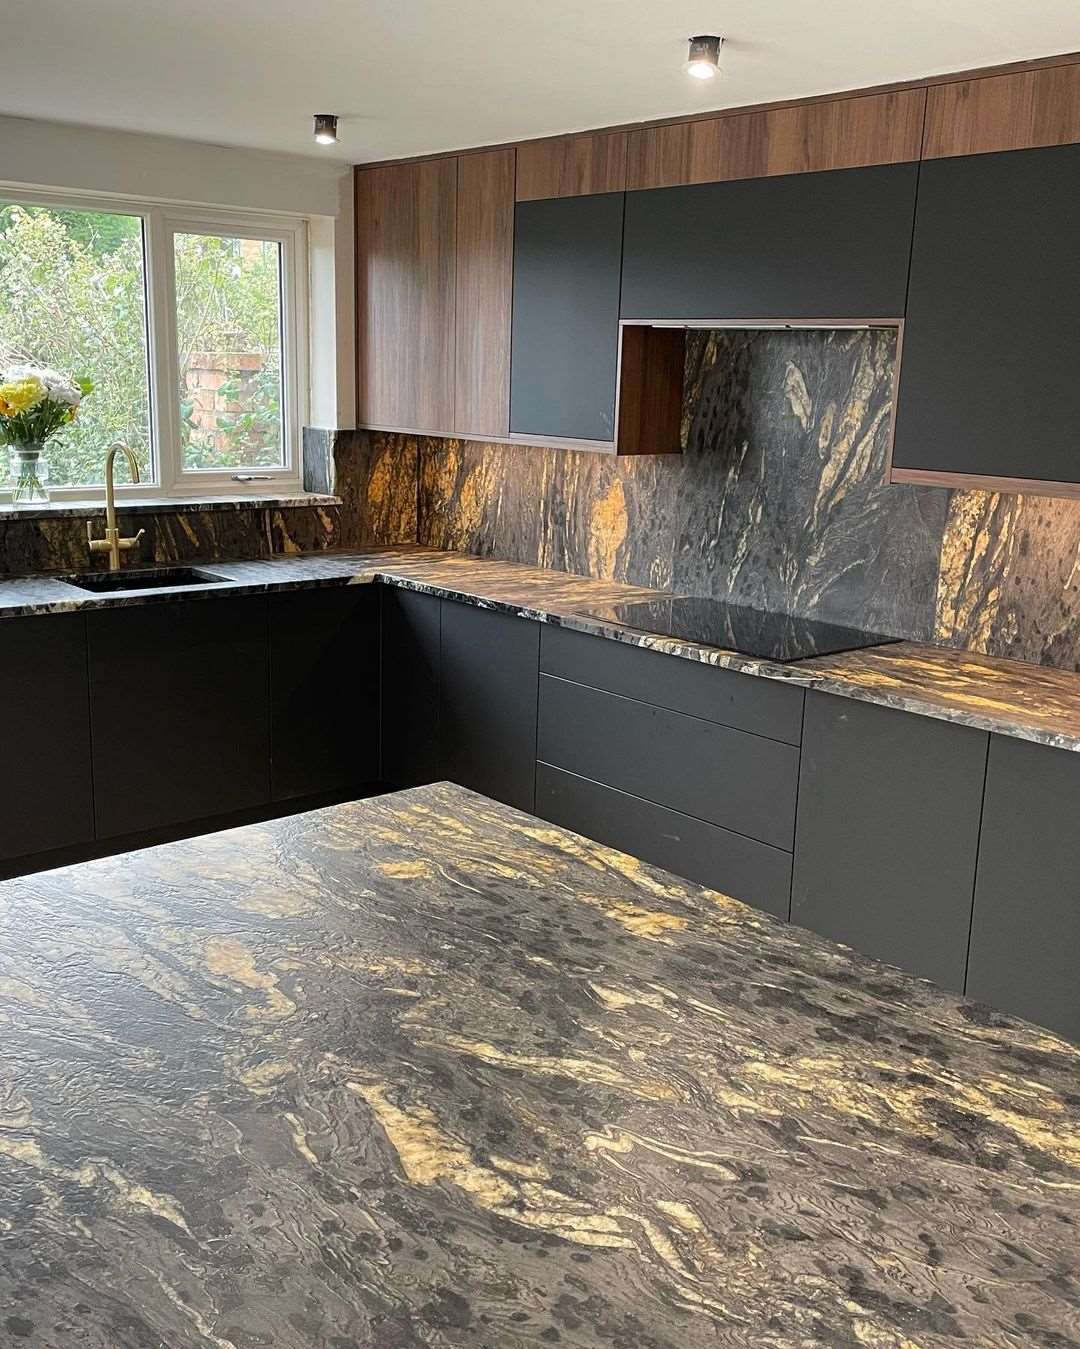 Cosmic Black Granite kitchen worktops, gold coloured swirls against a black background